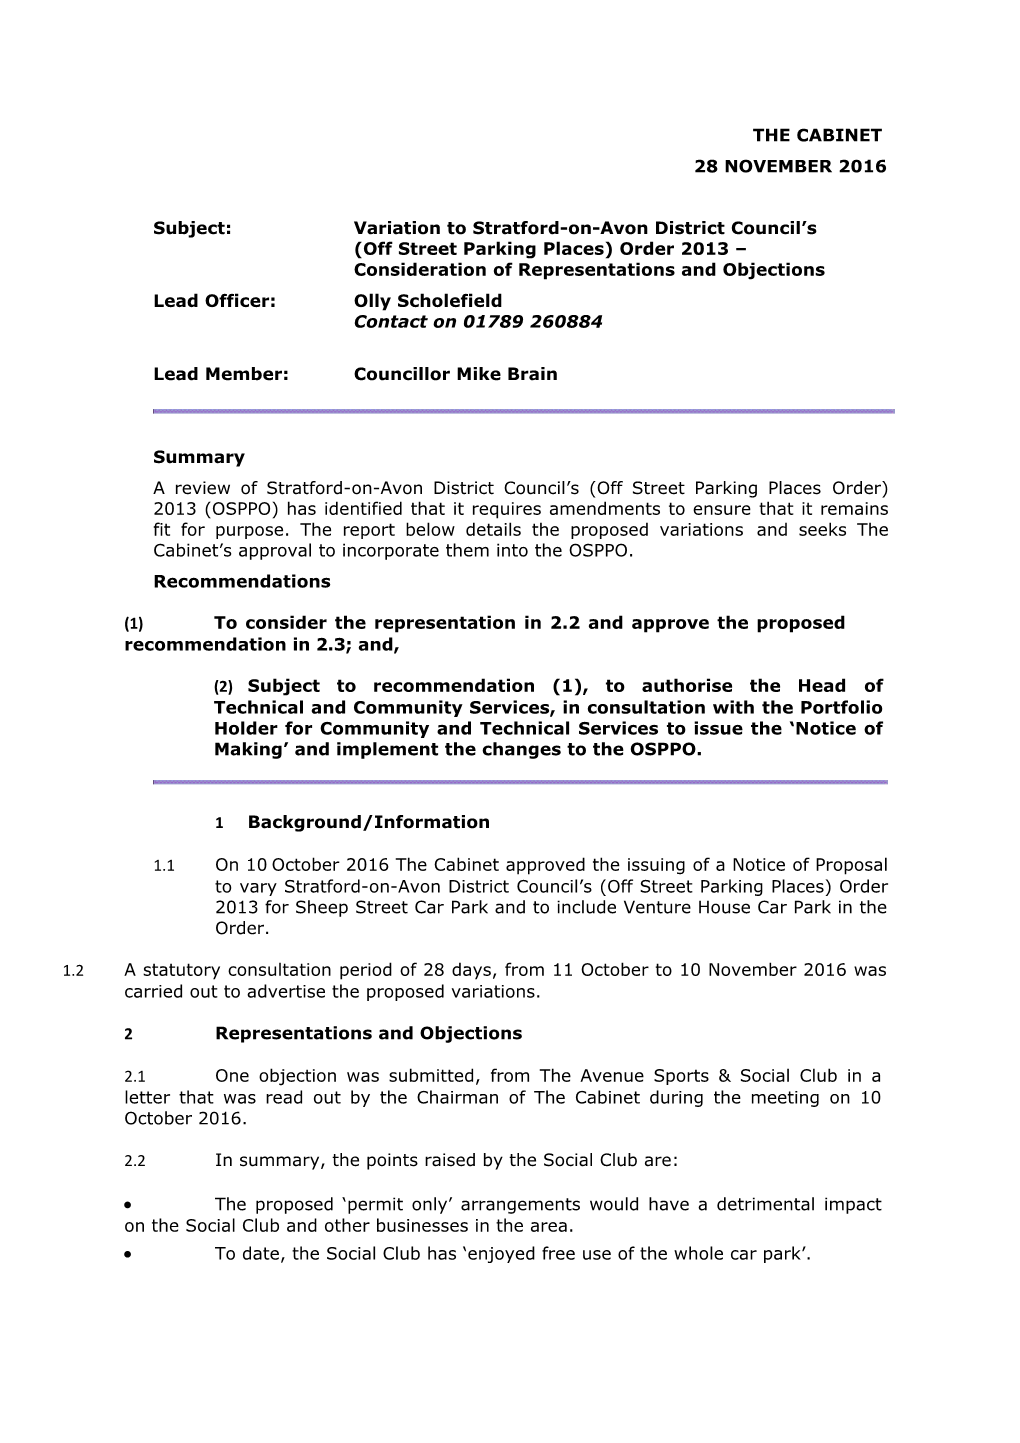 Subject:Variationto Stratford-On-Avon Districtcouncil S